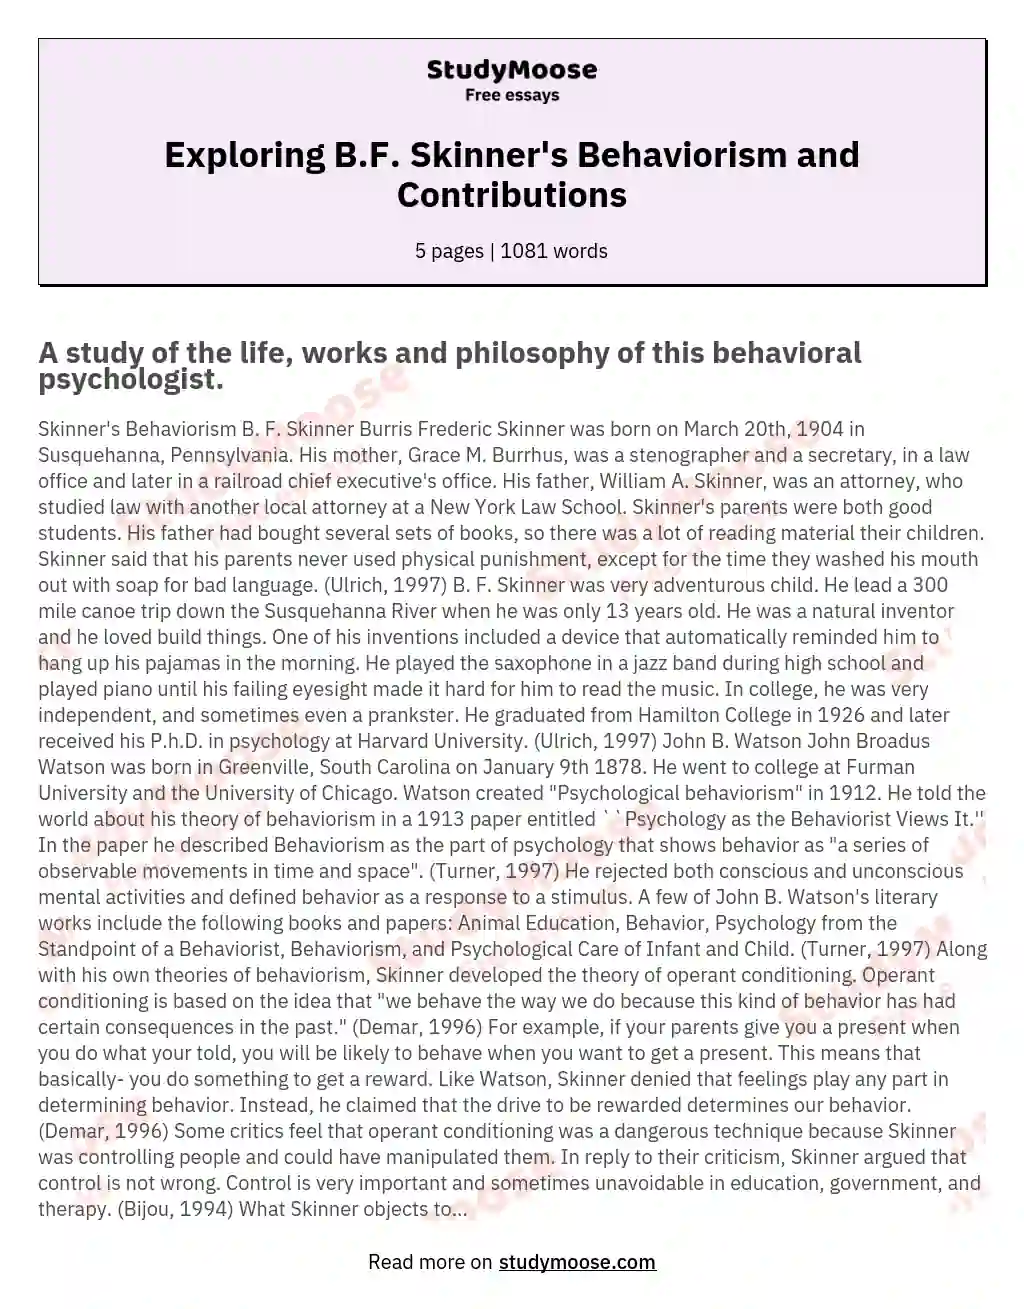 Exploring B.F. Skinner's Behaviorism and Contributions essay